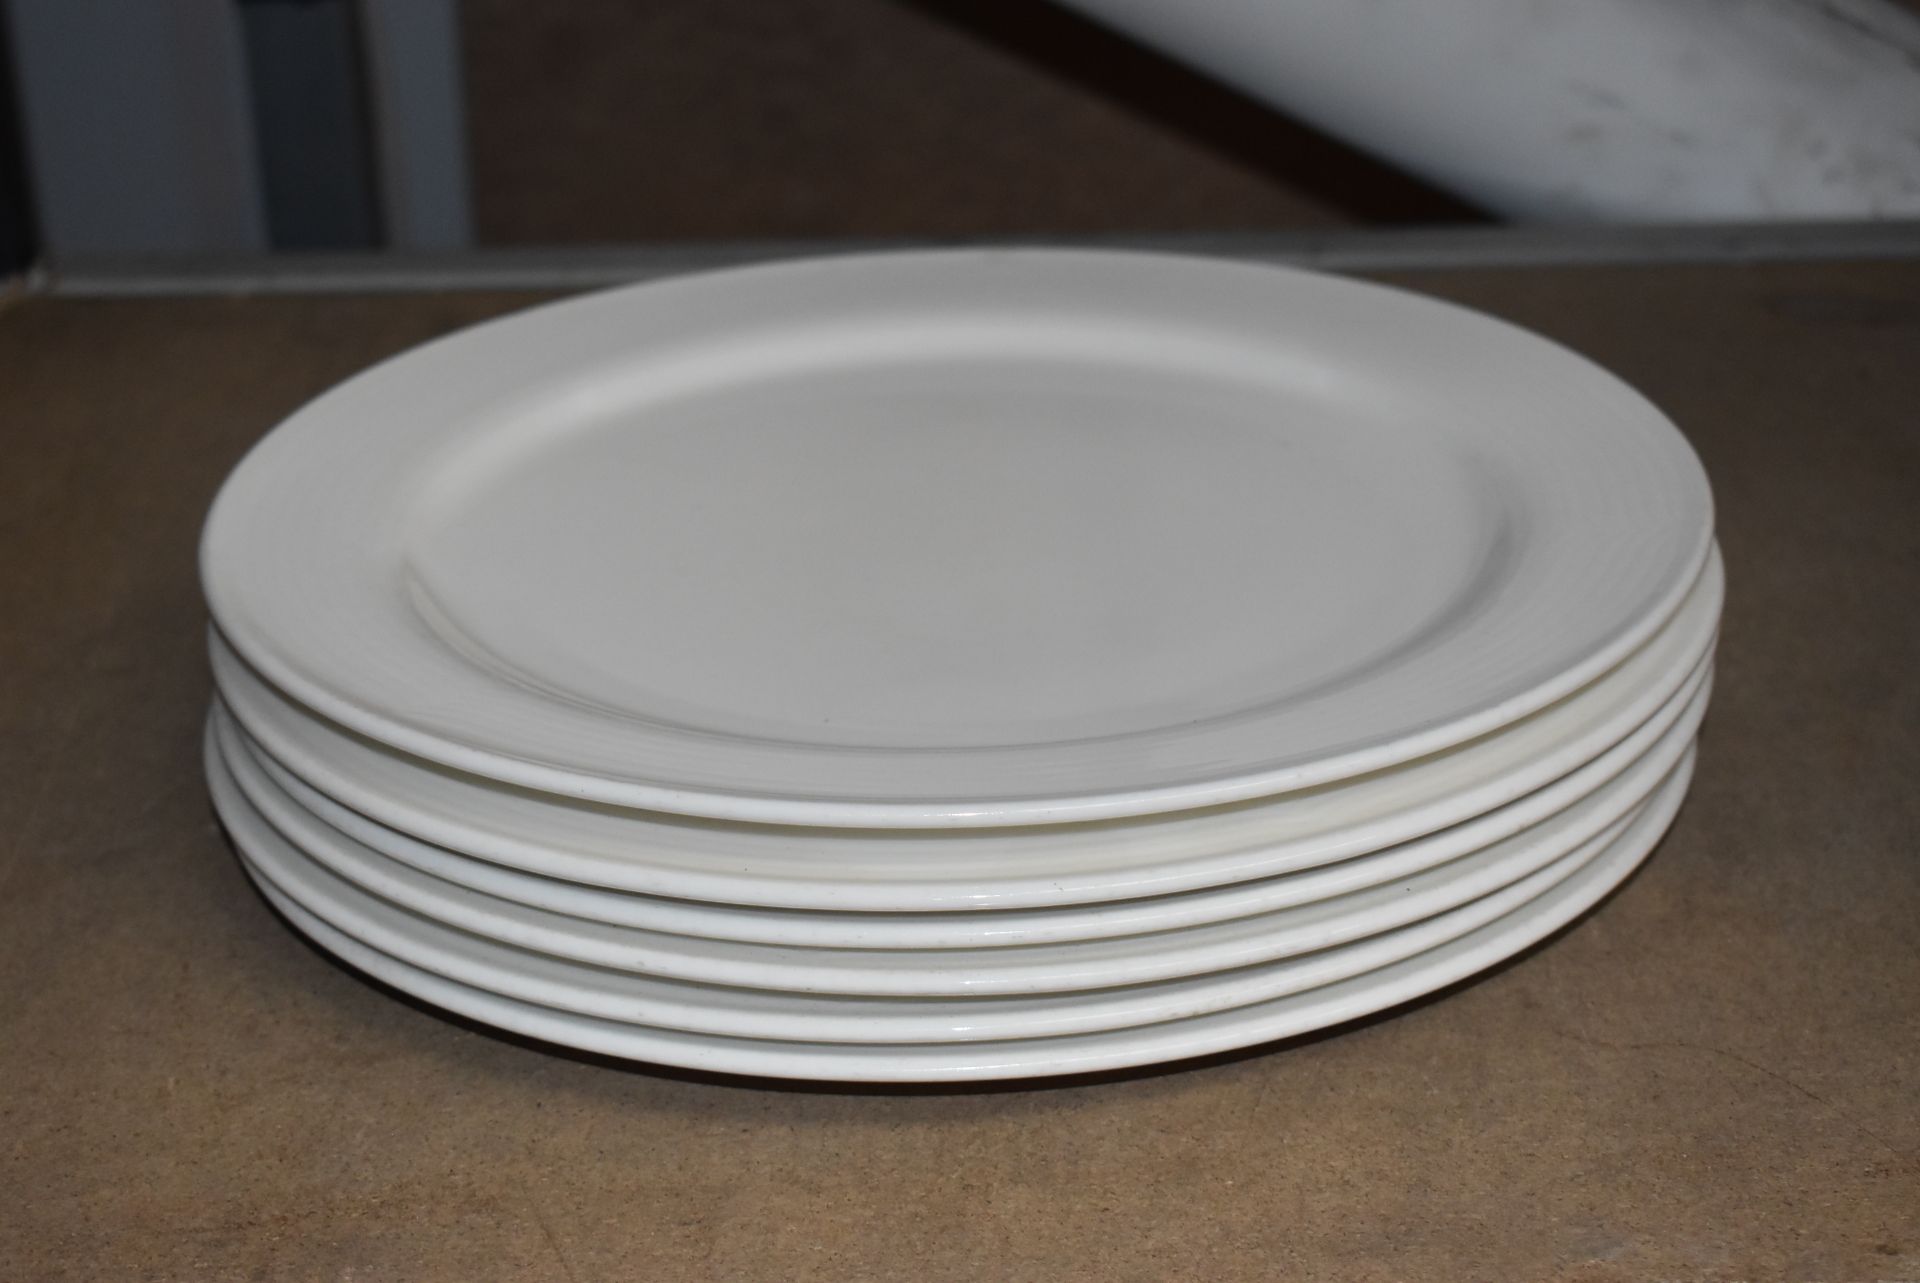 6 x Villeroy & Boch Contemporary Porcelain Flat Dinner Plates - 31.5 cms - CL011 - Ref: PX284 - - Image 2 of 7